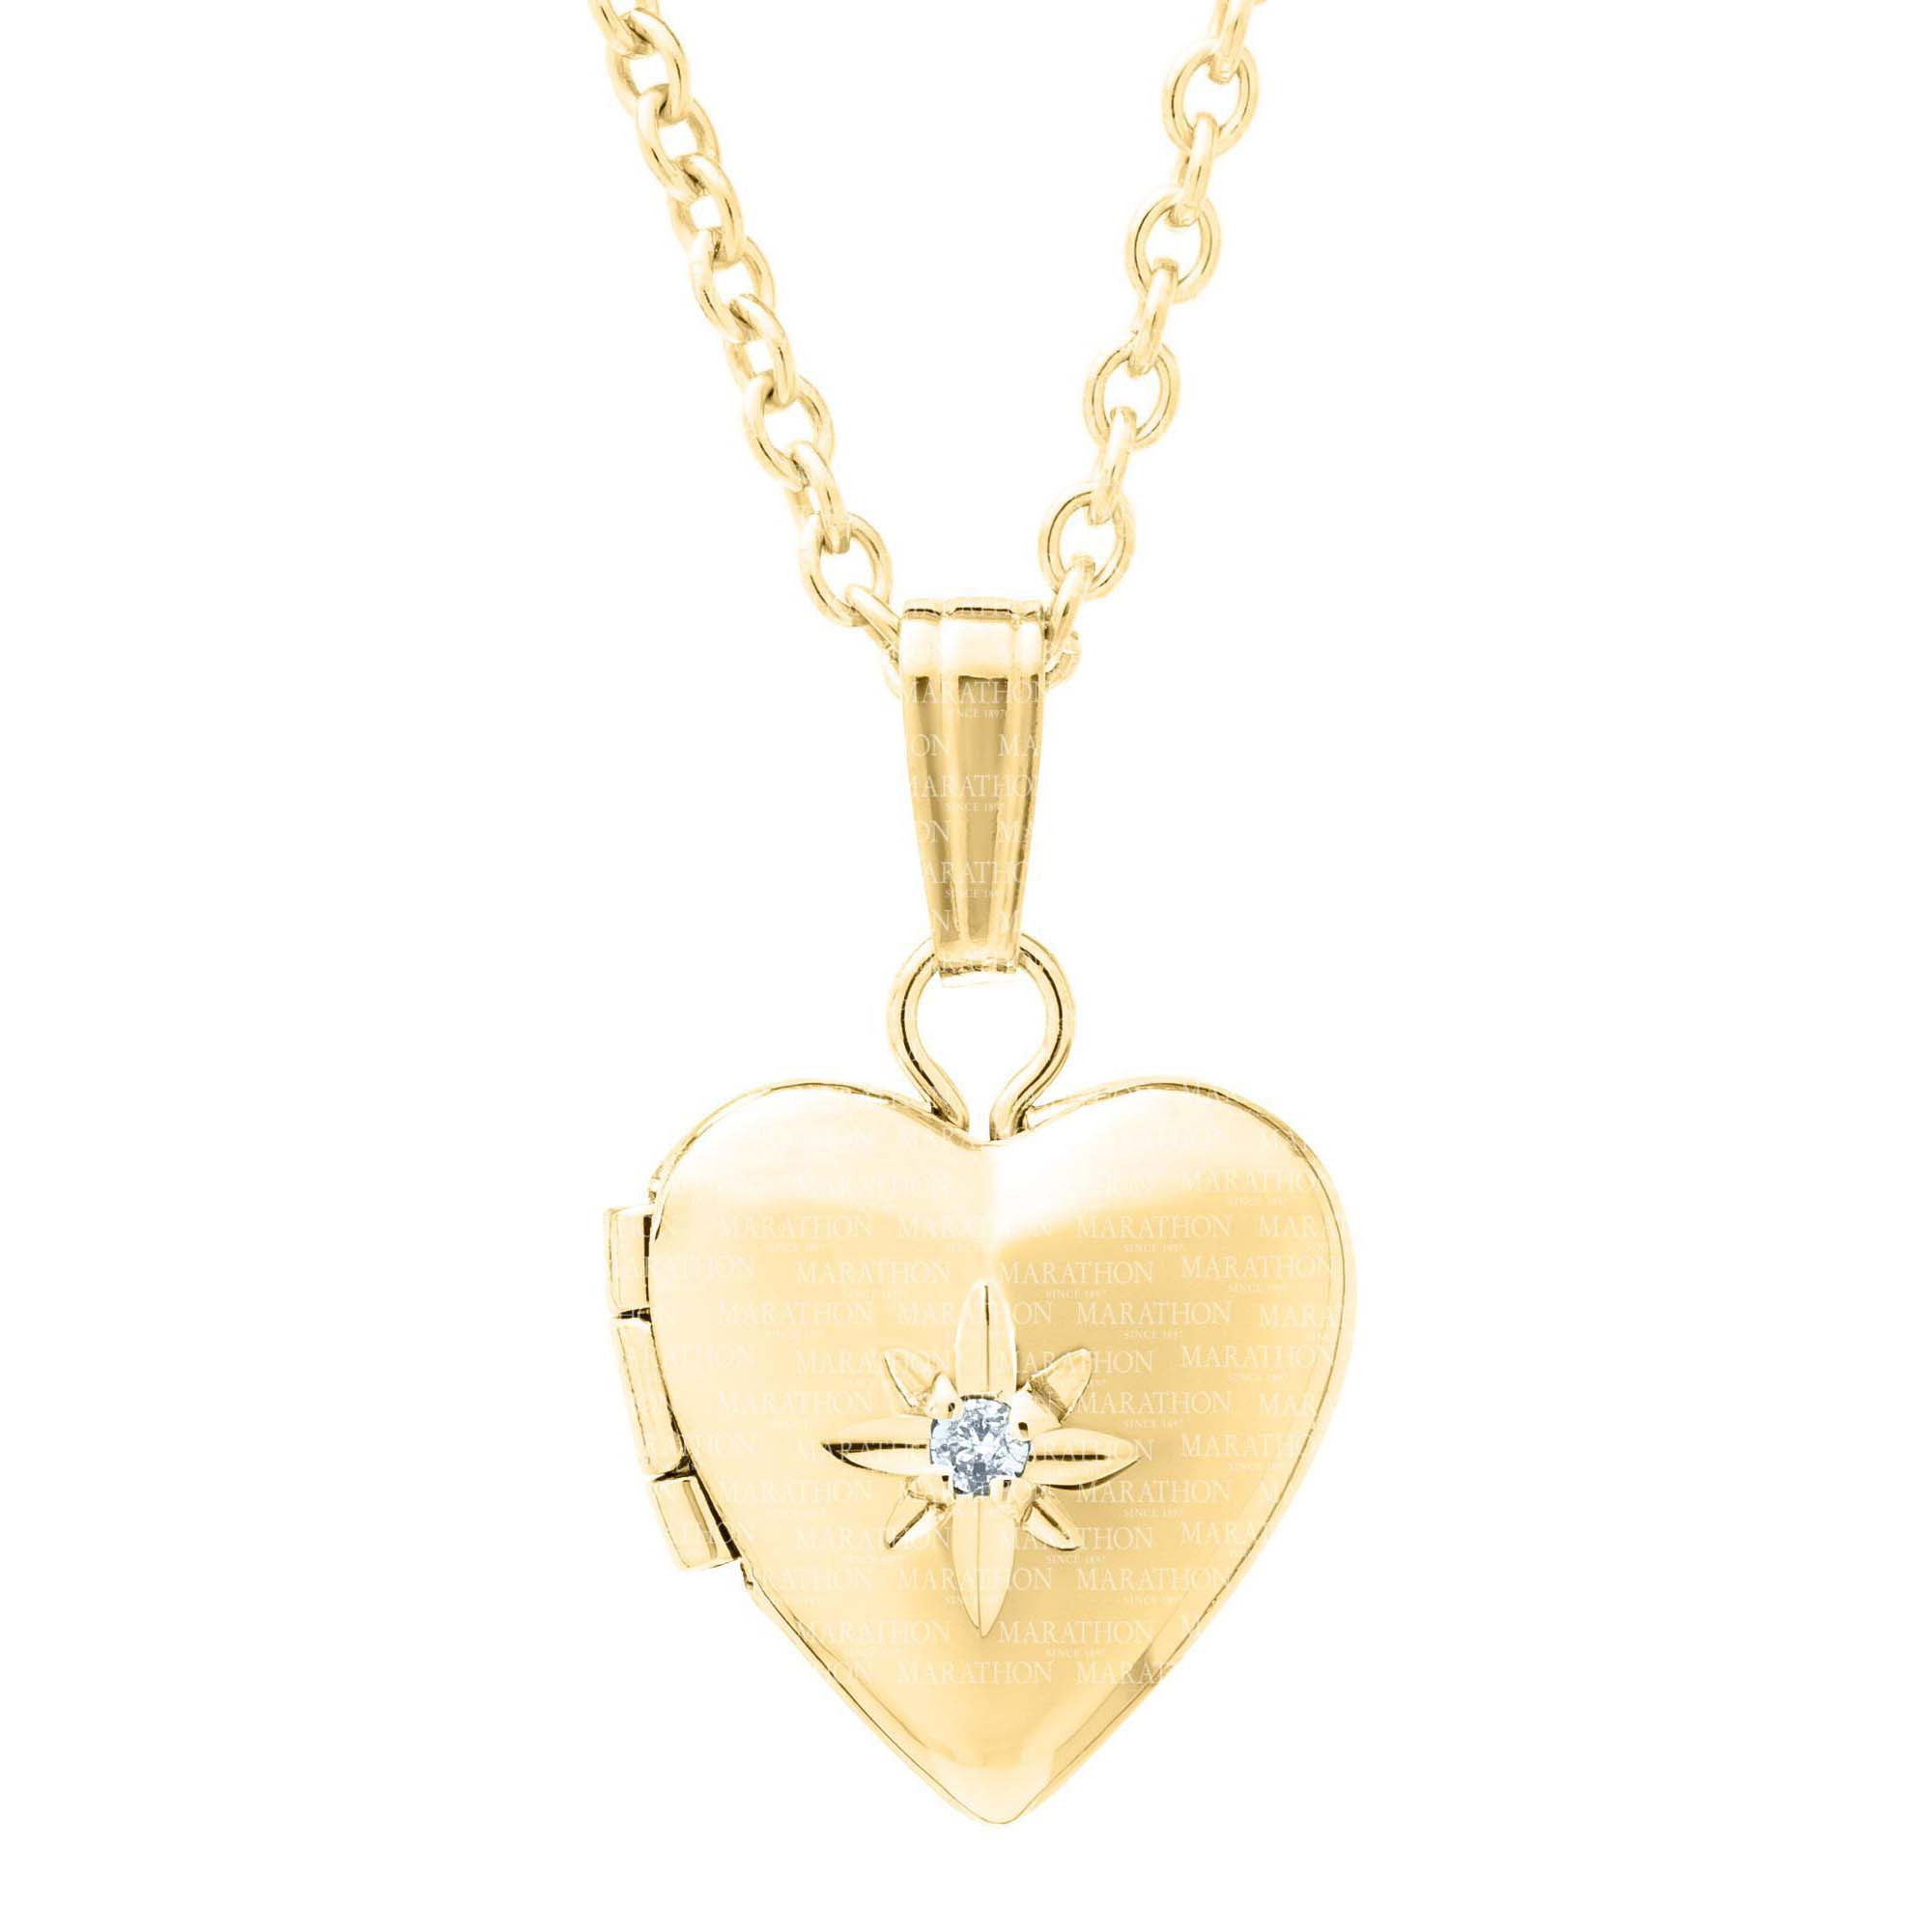 14K Gold-Filled .01ct Diamond Heart Locket. 10x16mm. 13" chain. #12372